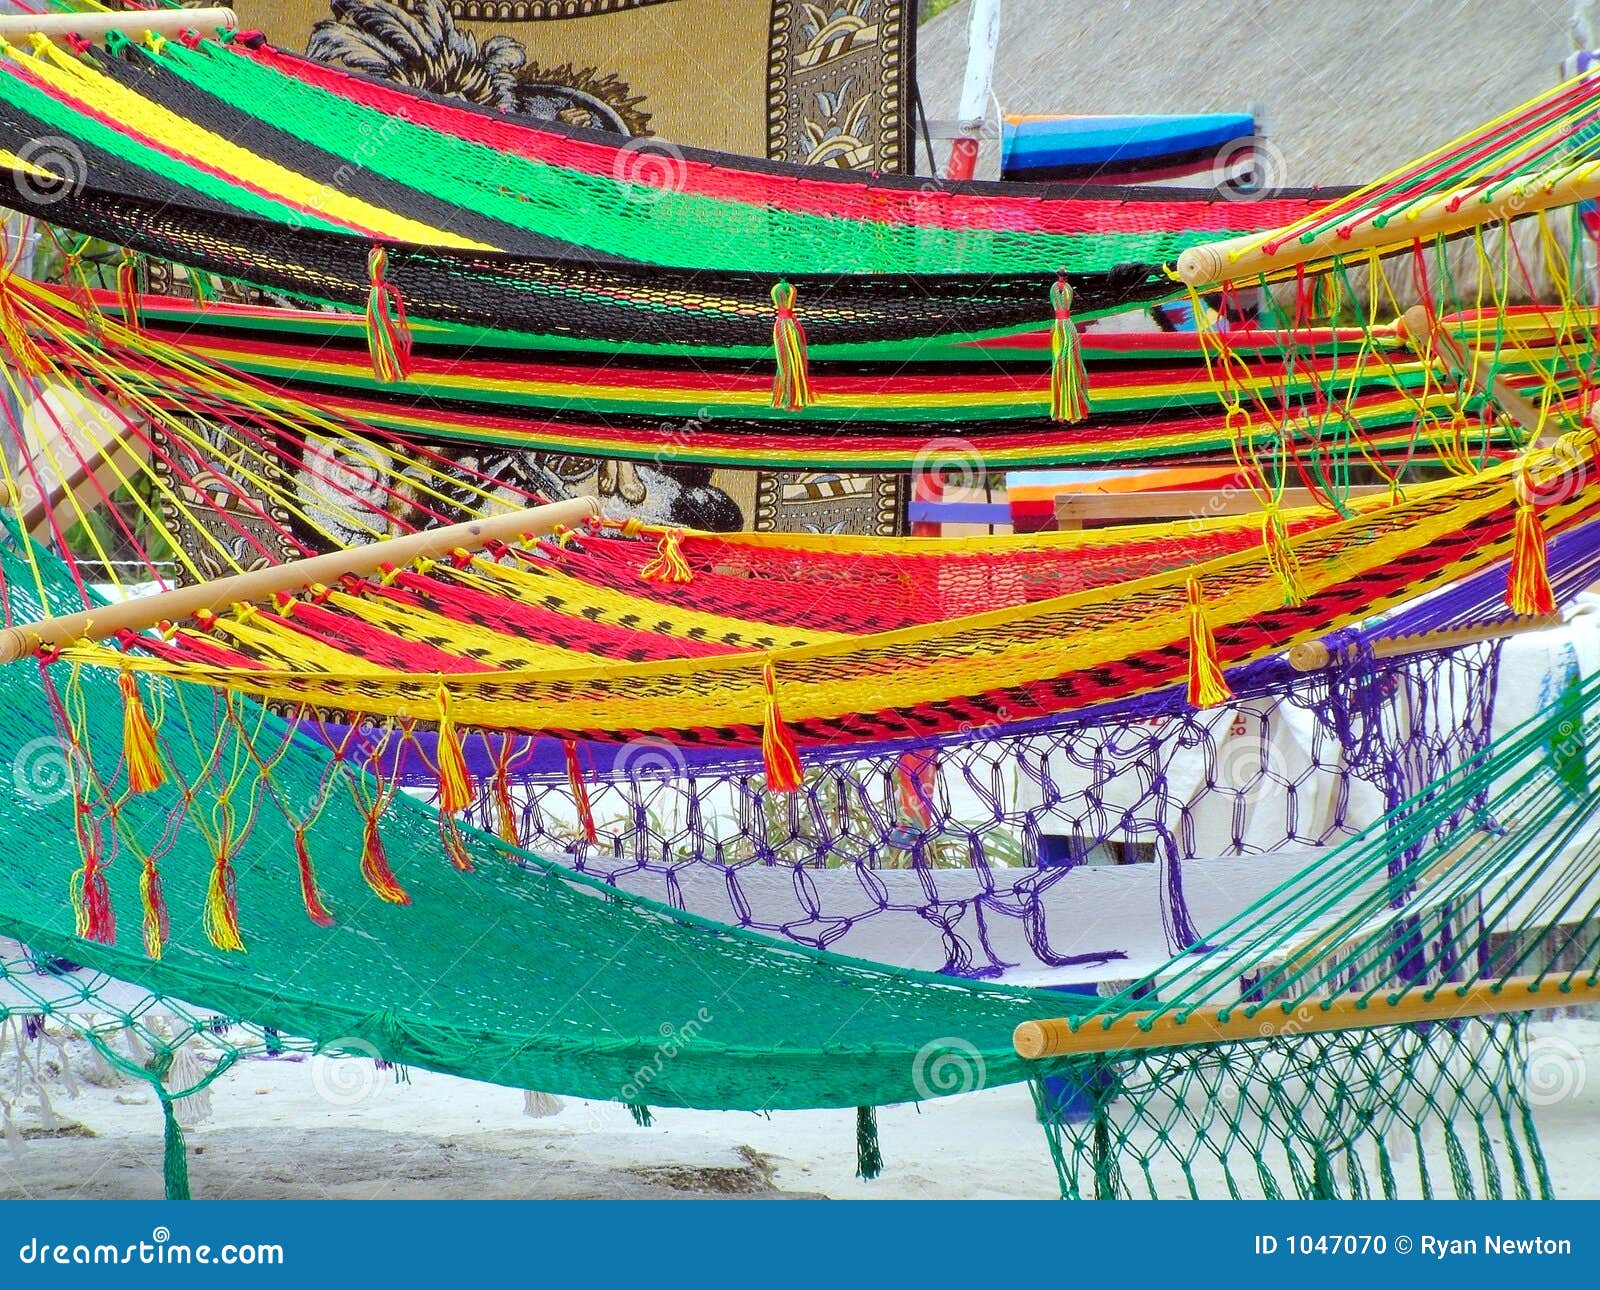 colorful hammocks